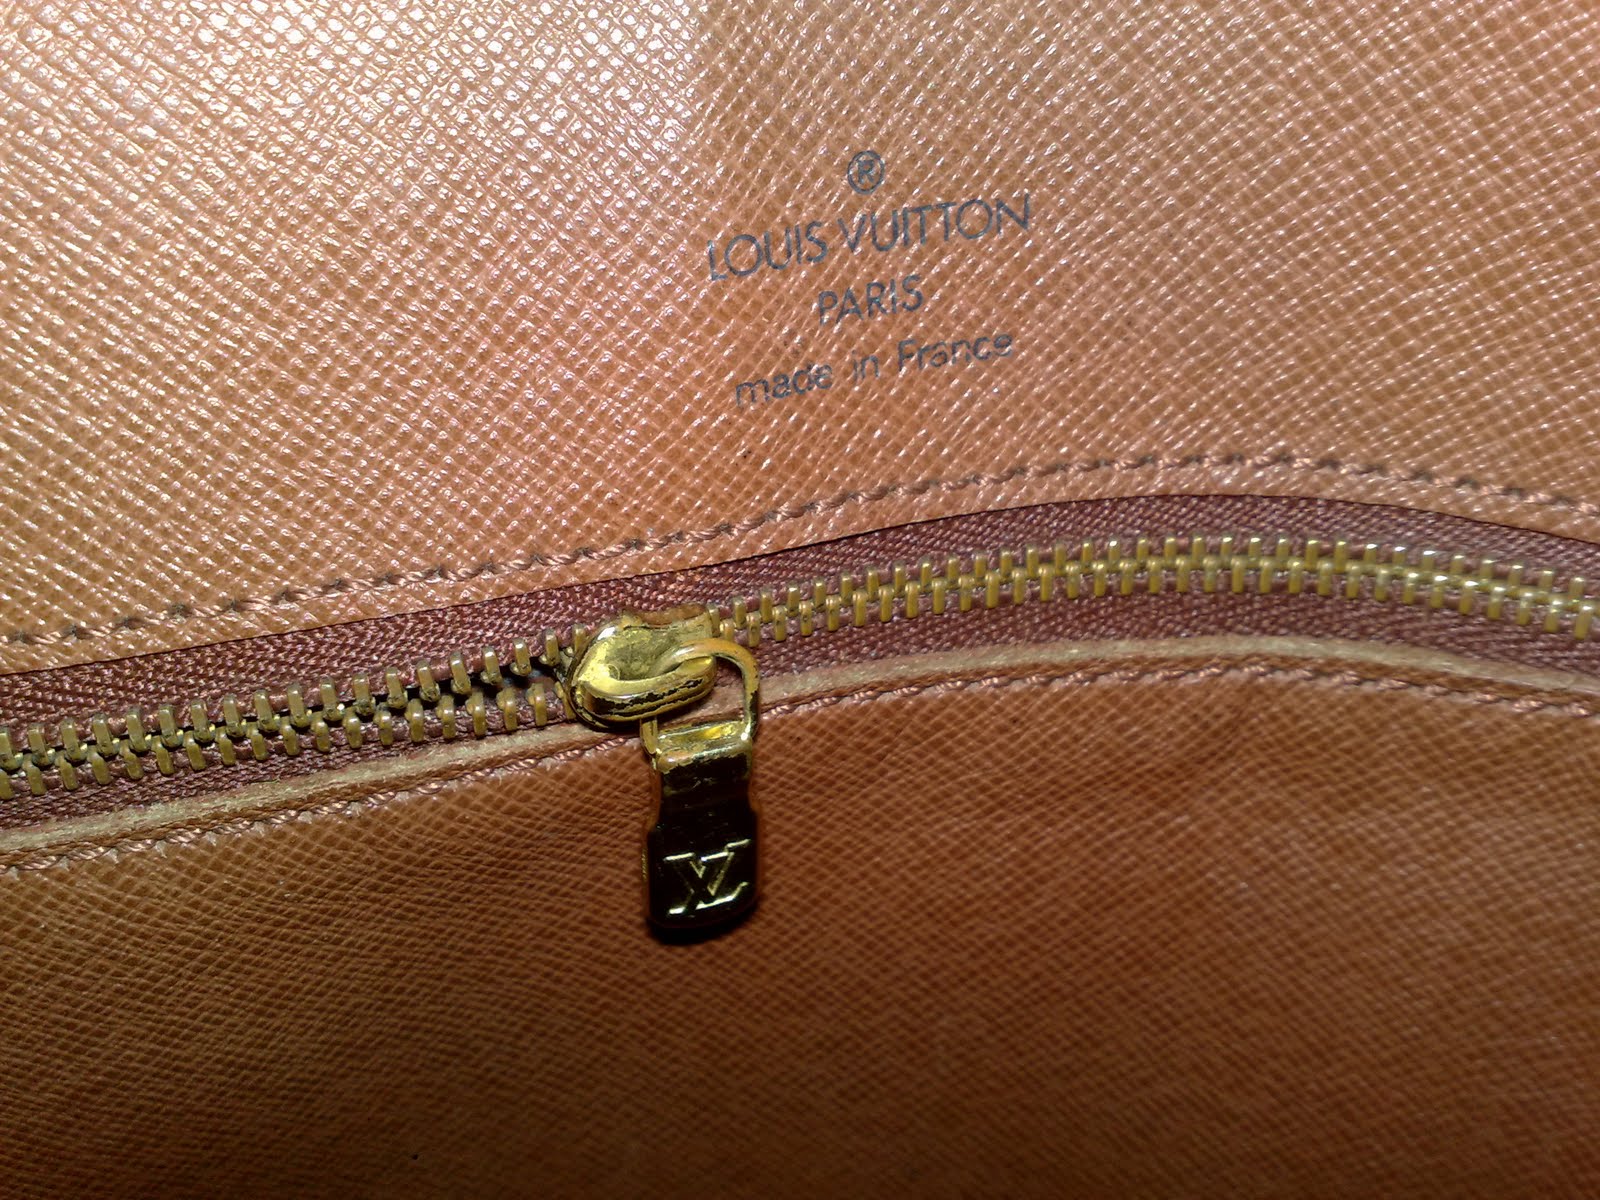 pArT tiMe bUnDLe: Louis Vuitton Monogram Sling Bag (SOLD)